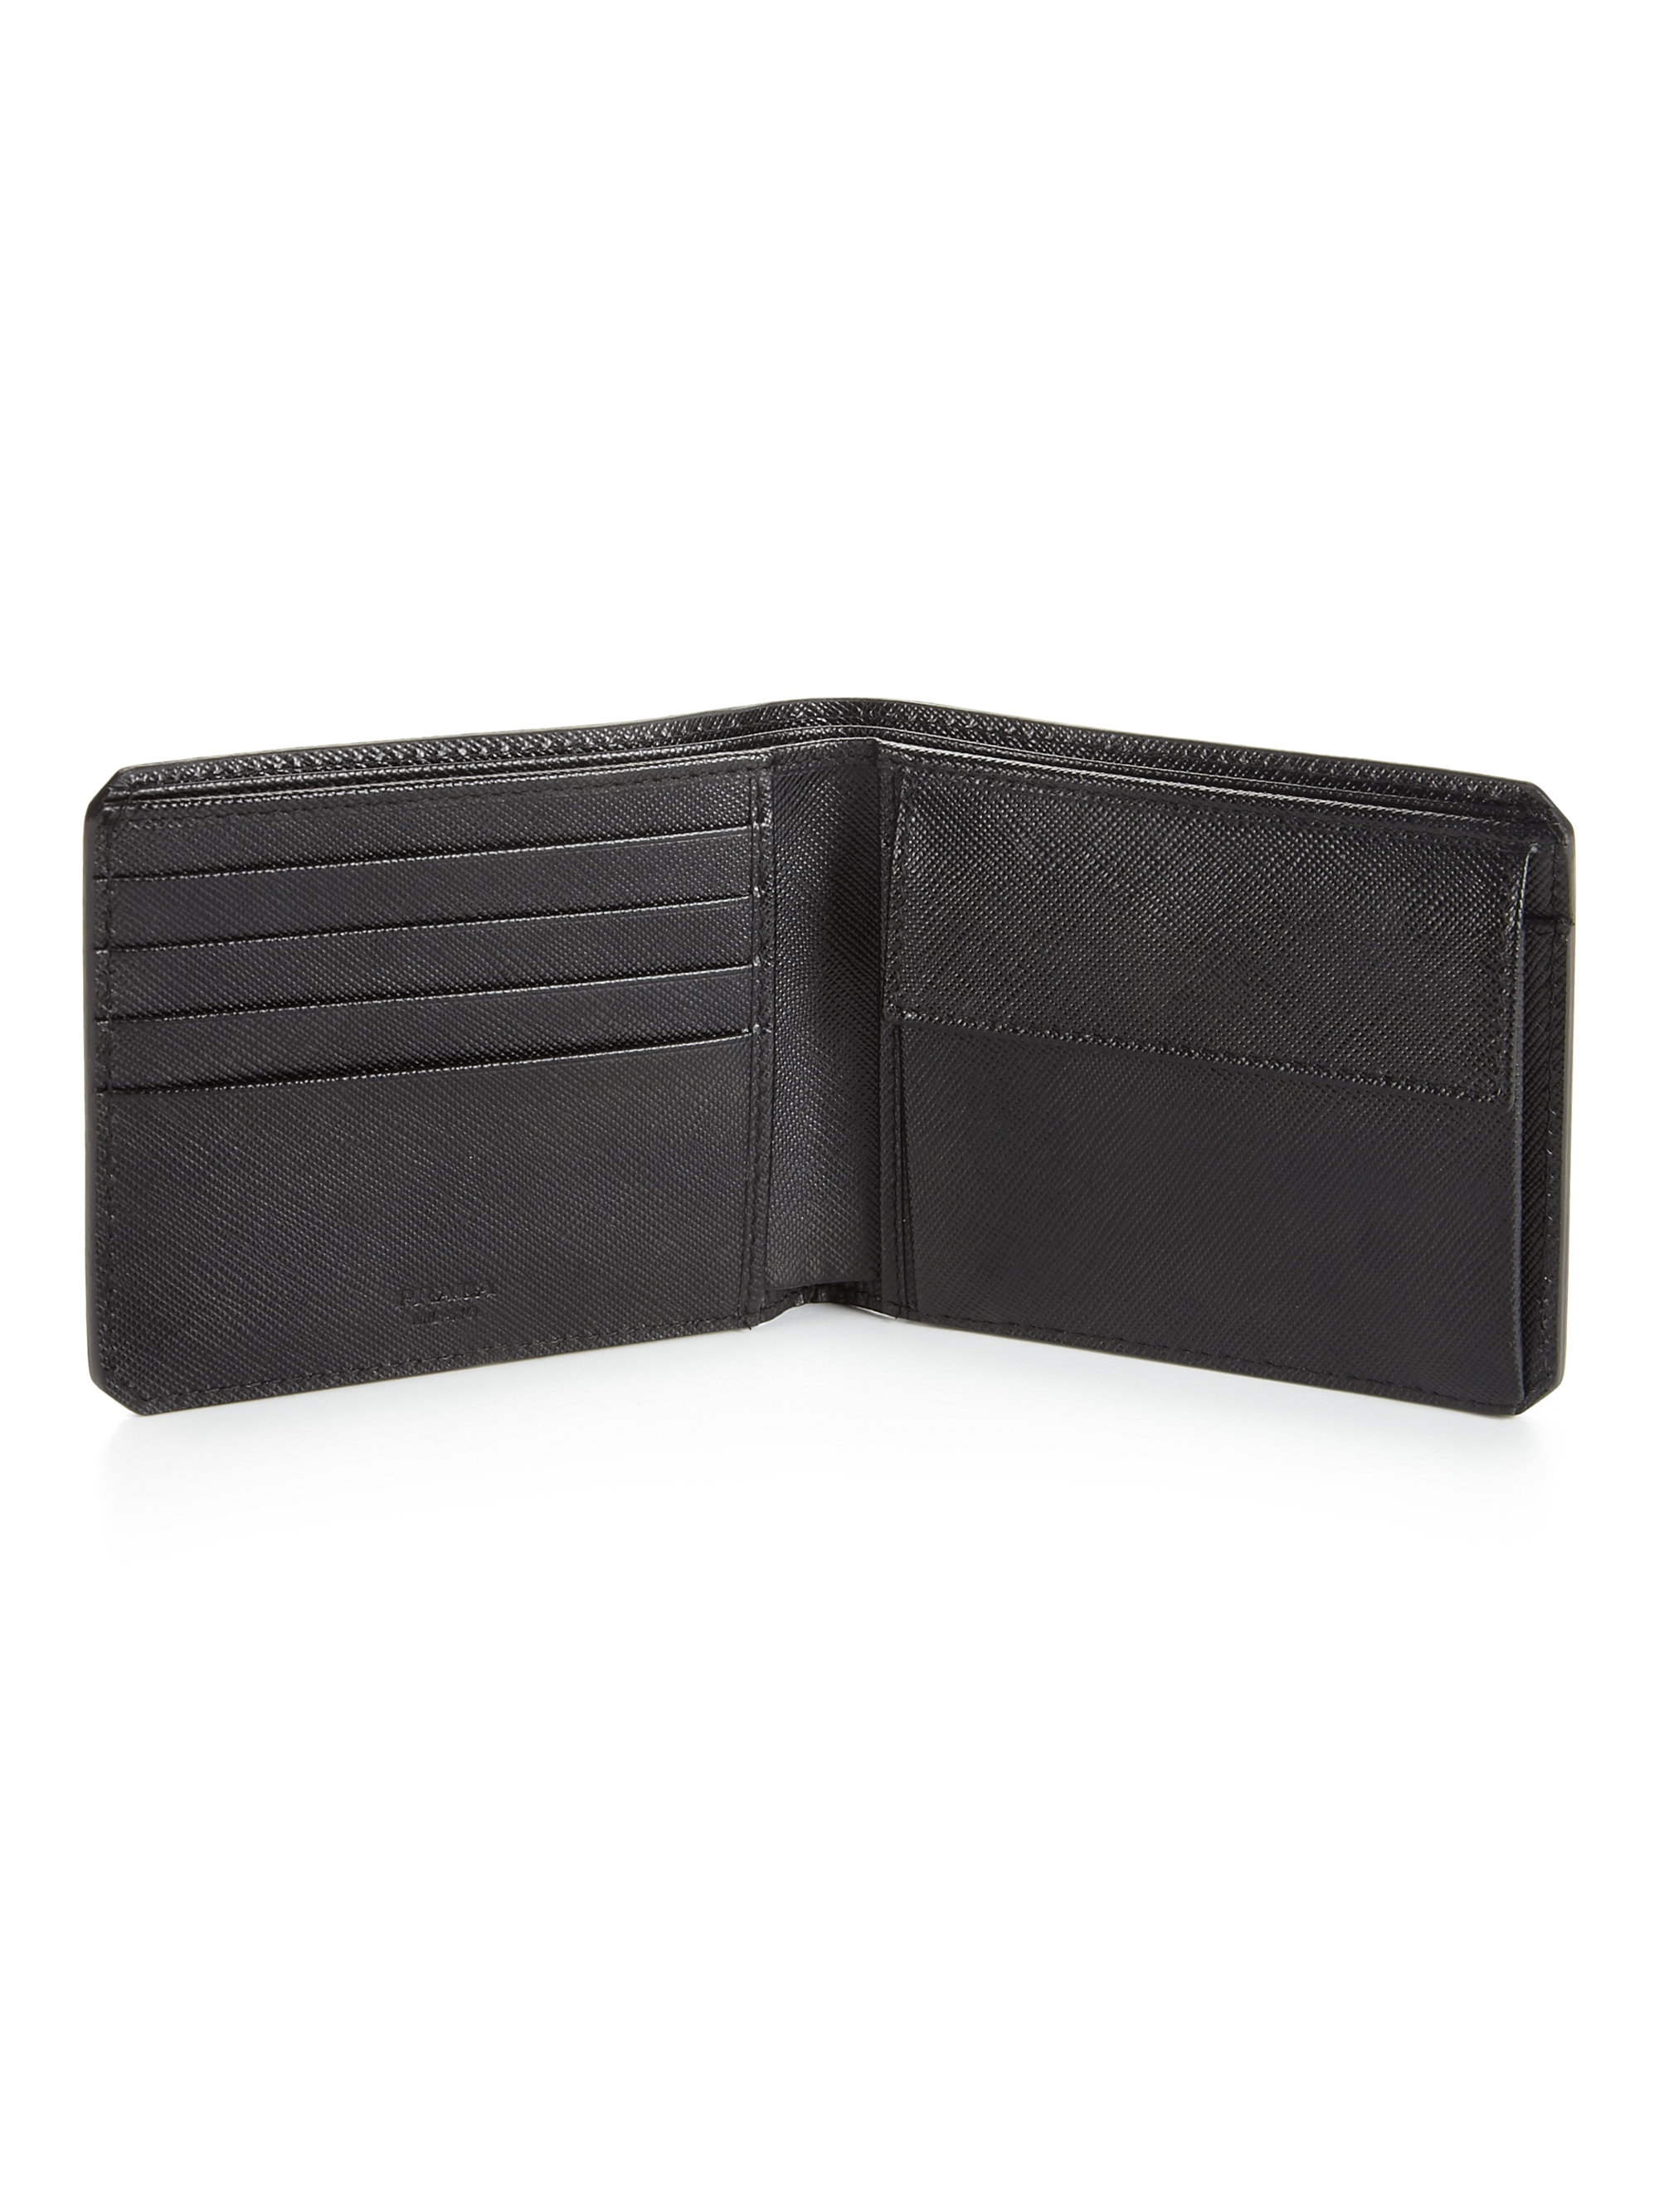 Lyst - Prada Saffiano Leather Wallet in Black for Men